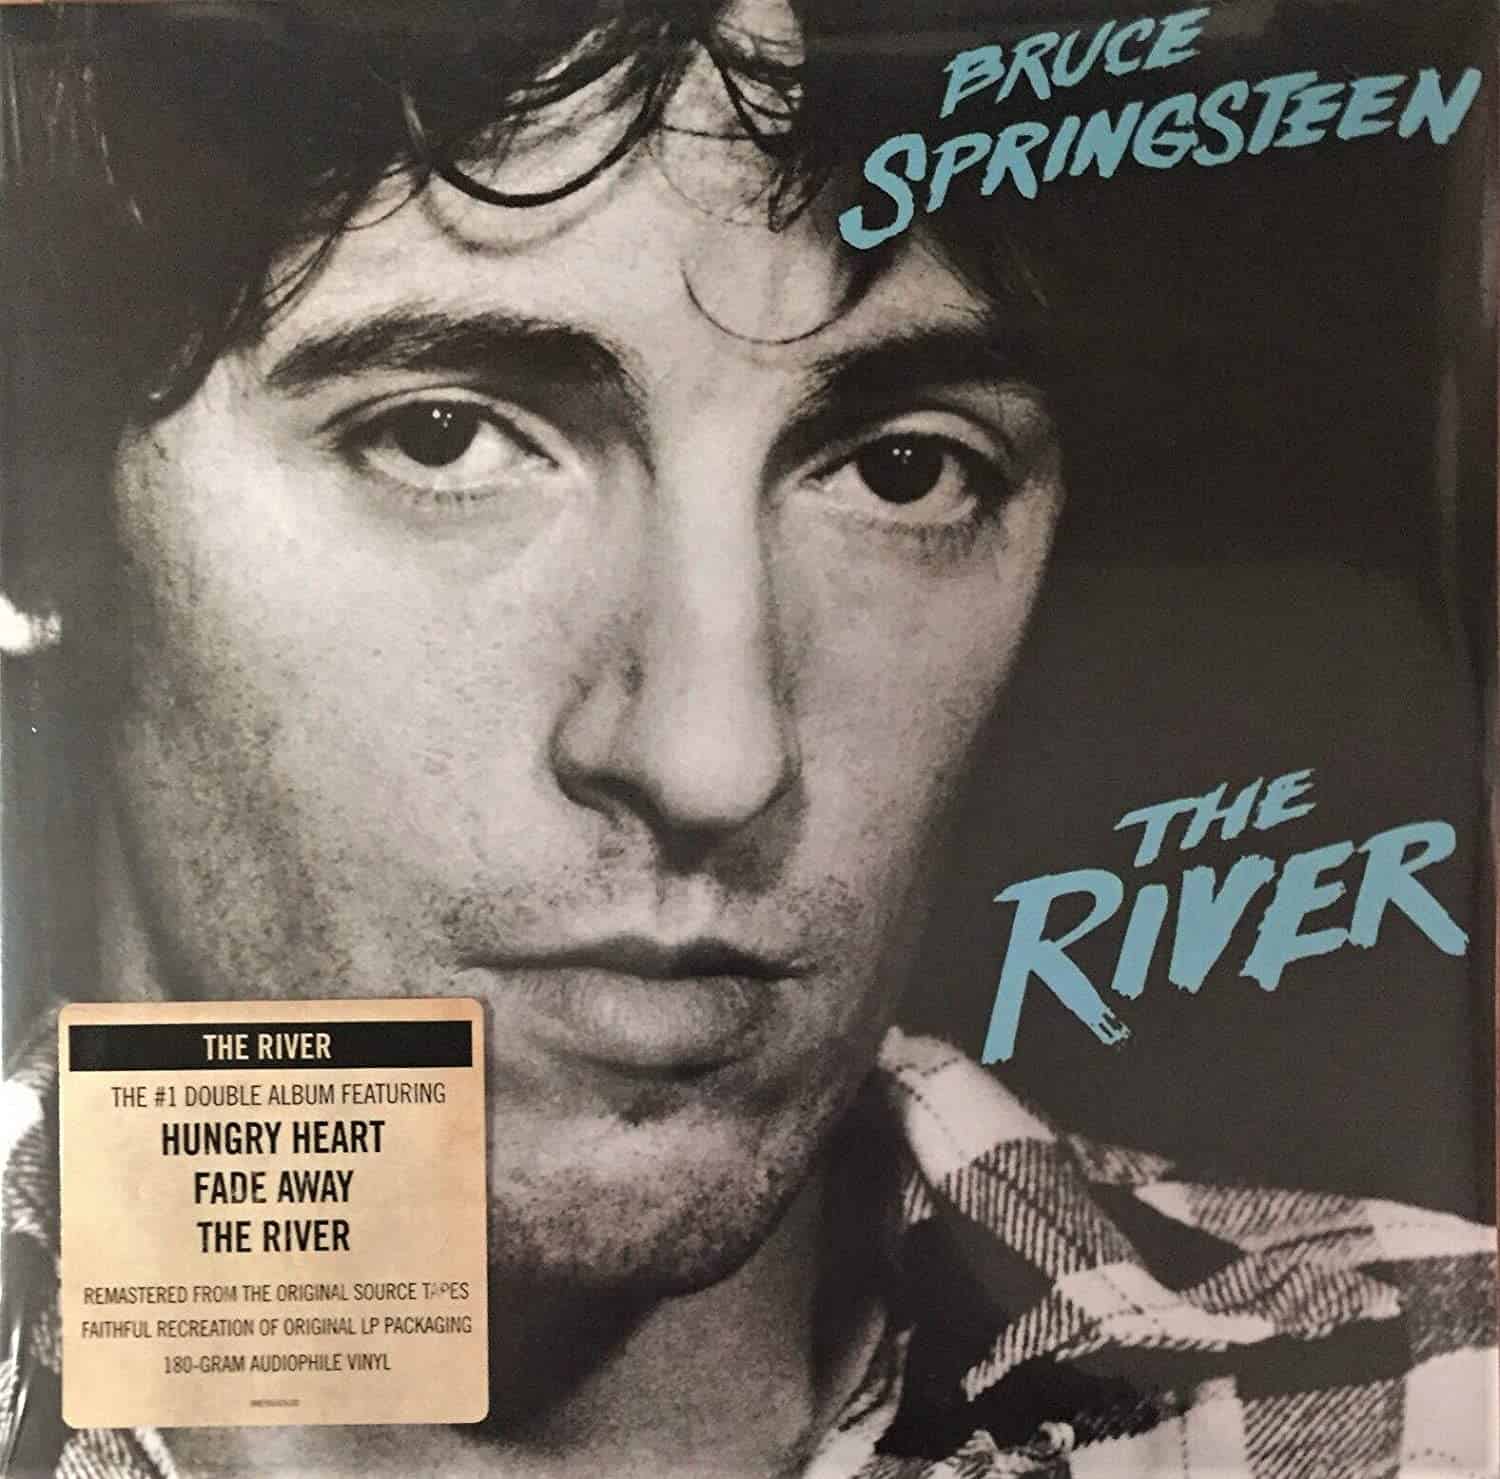 Bruce-Springsteen-The-River-vinyl-record-album-front